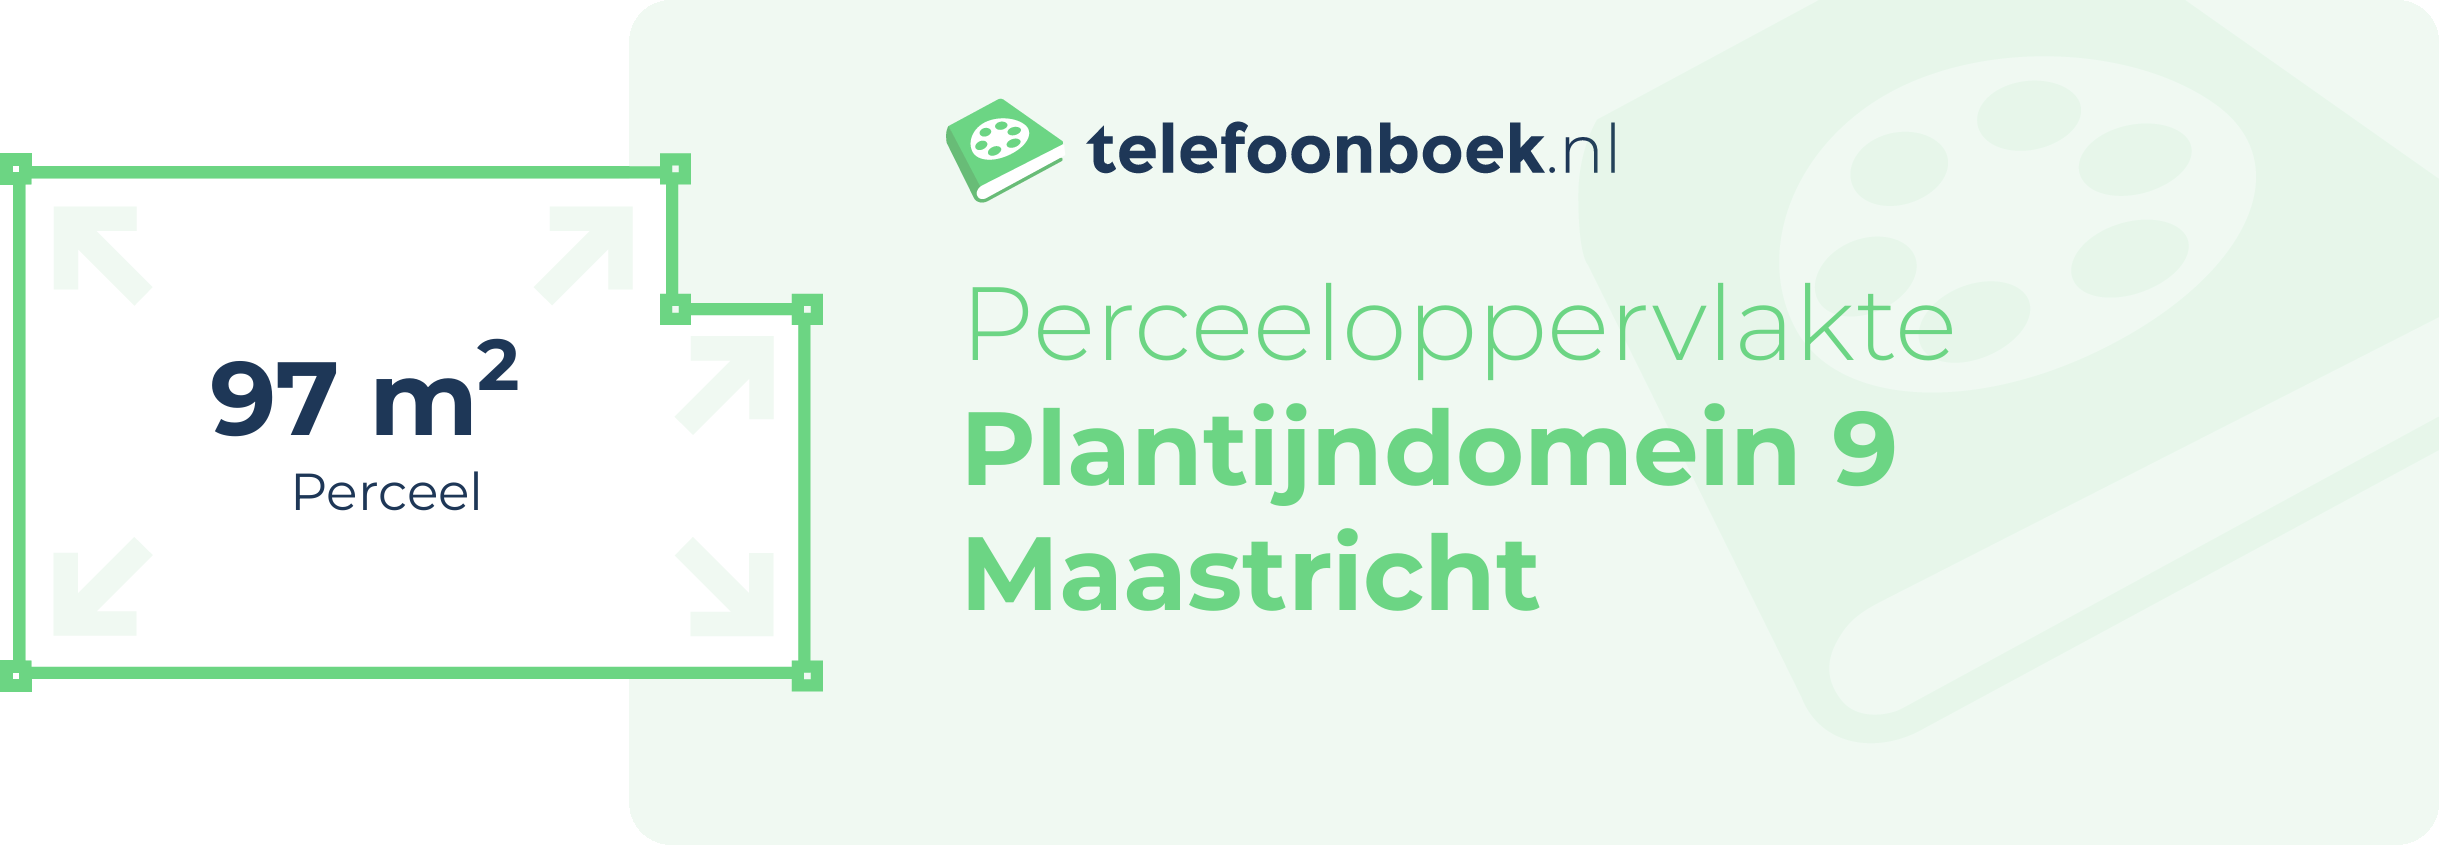 Perceeloppervlakte Plantijndomein 9 Maastricht